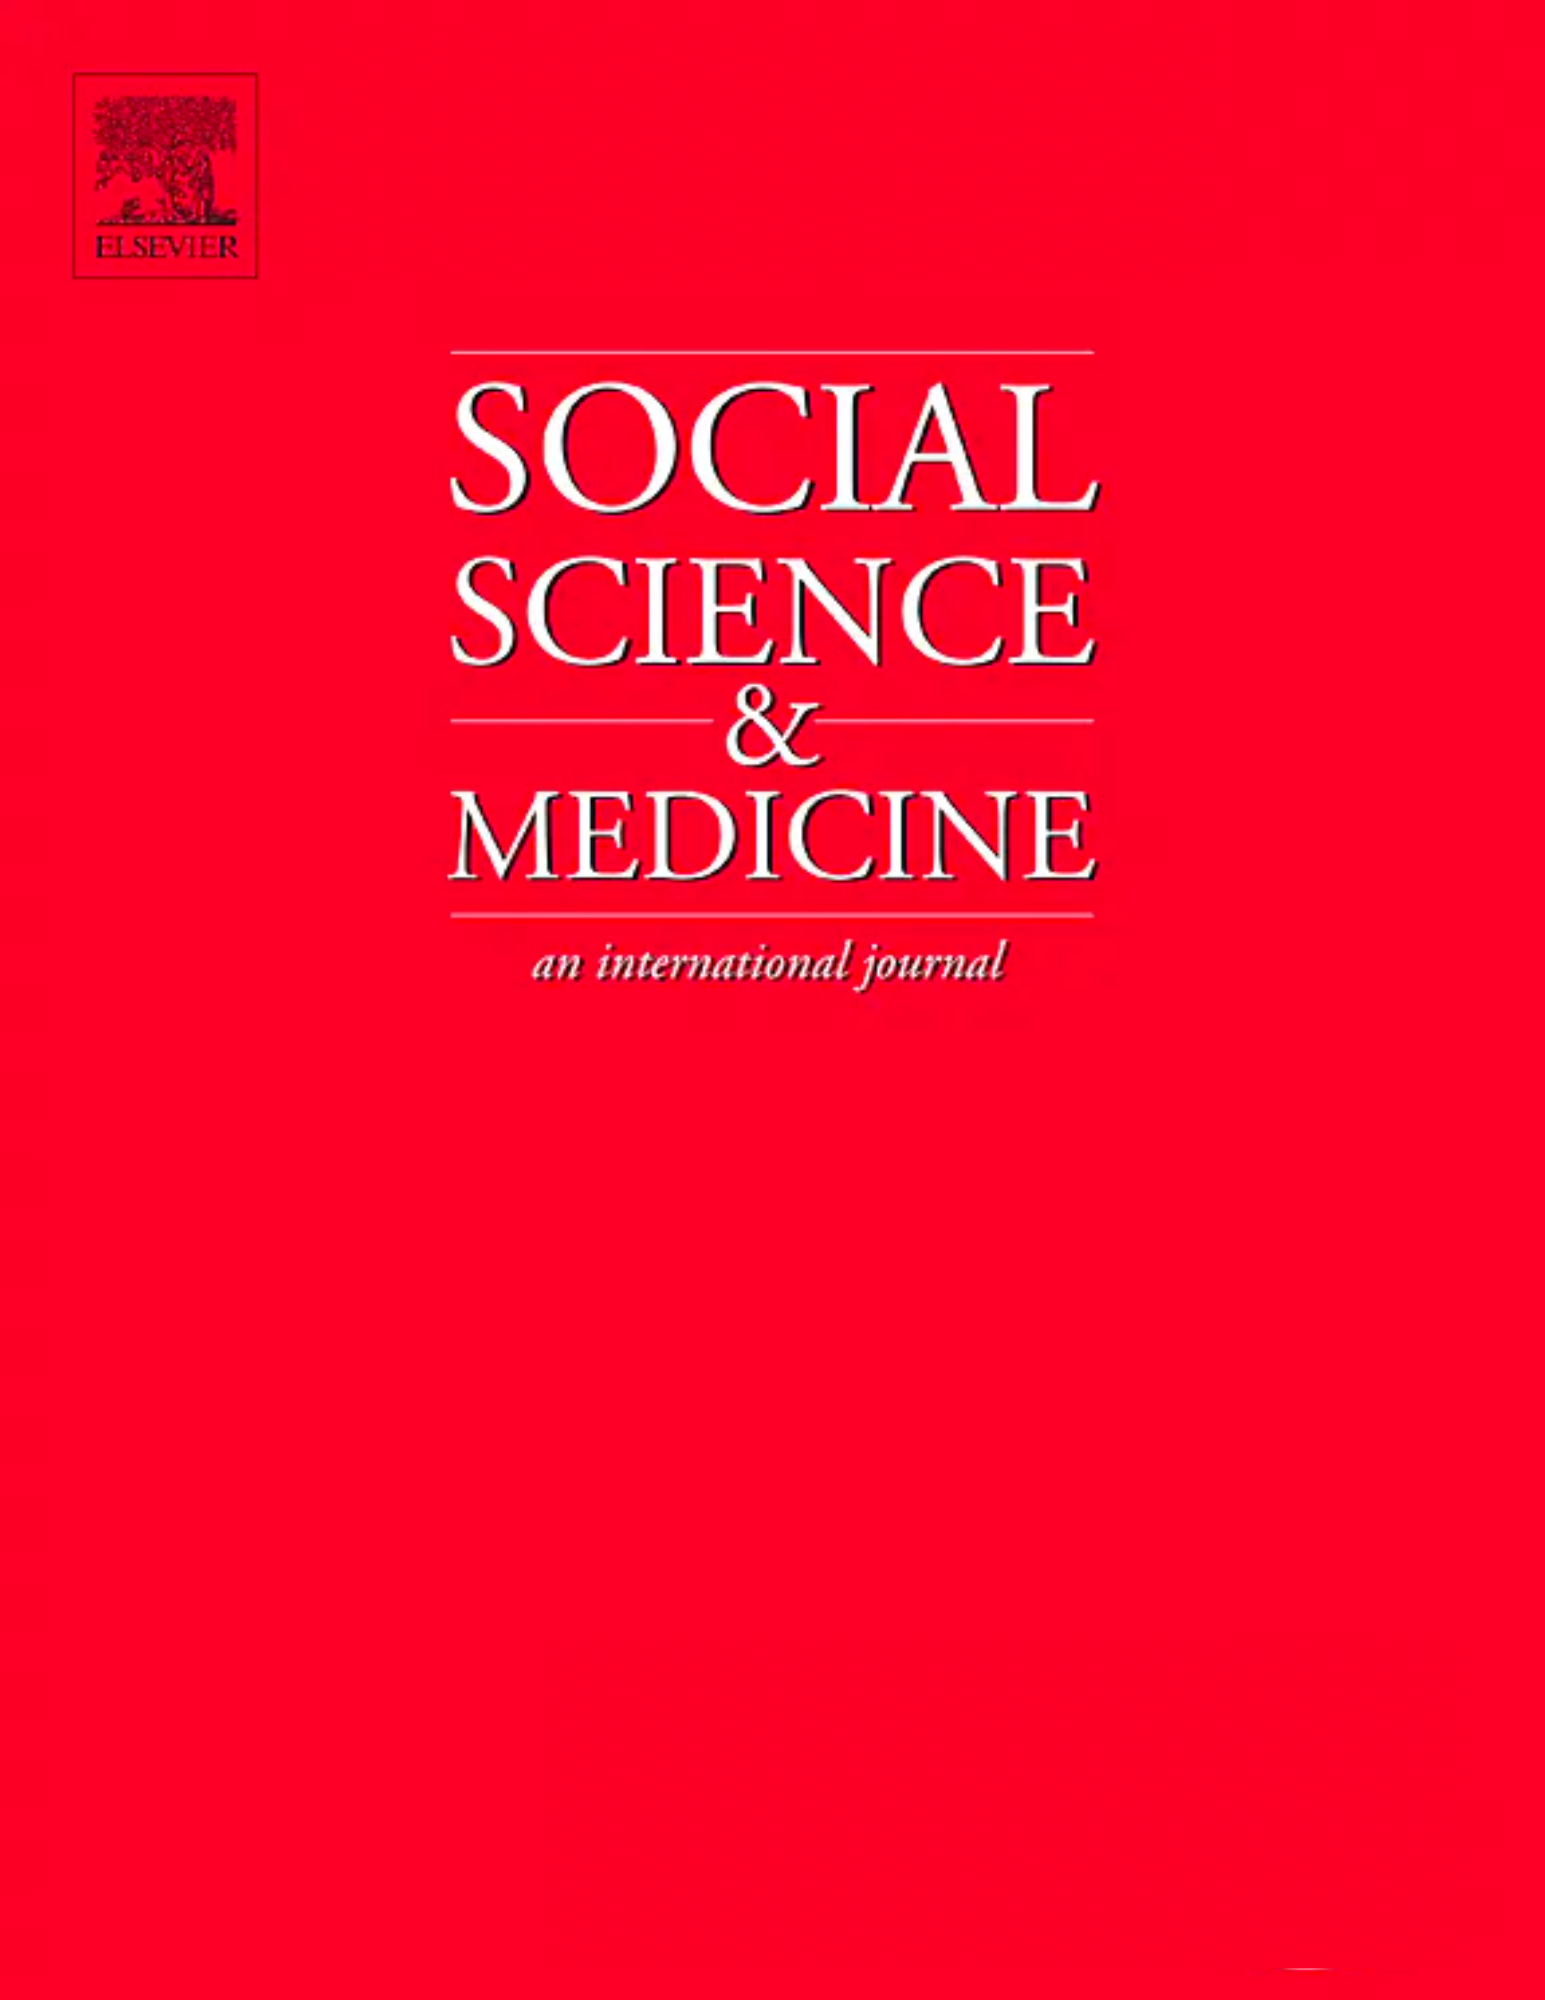 Social science and medicine